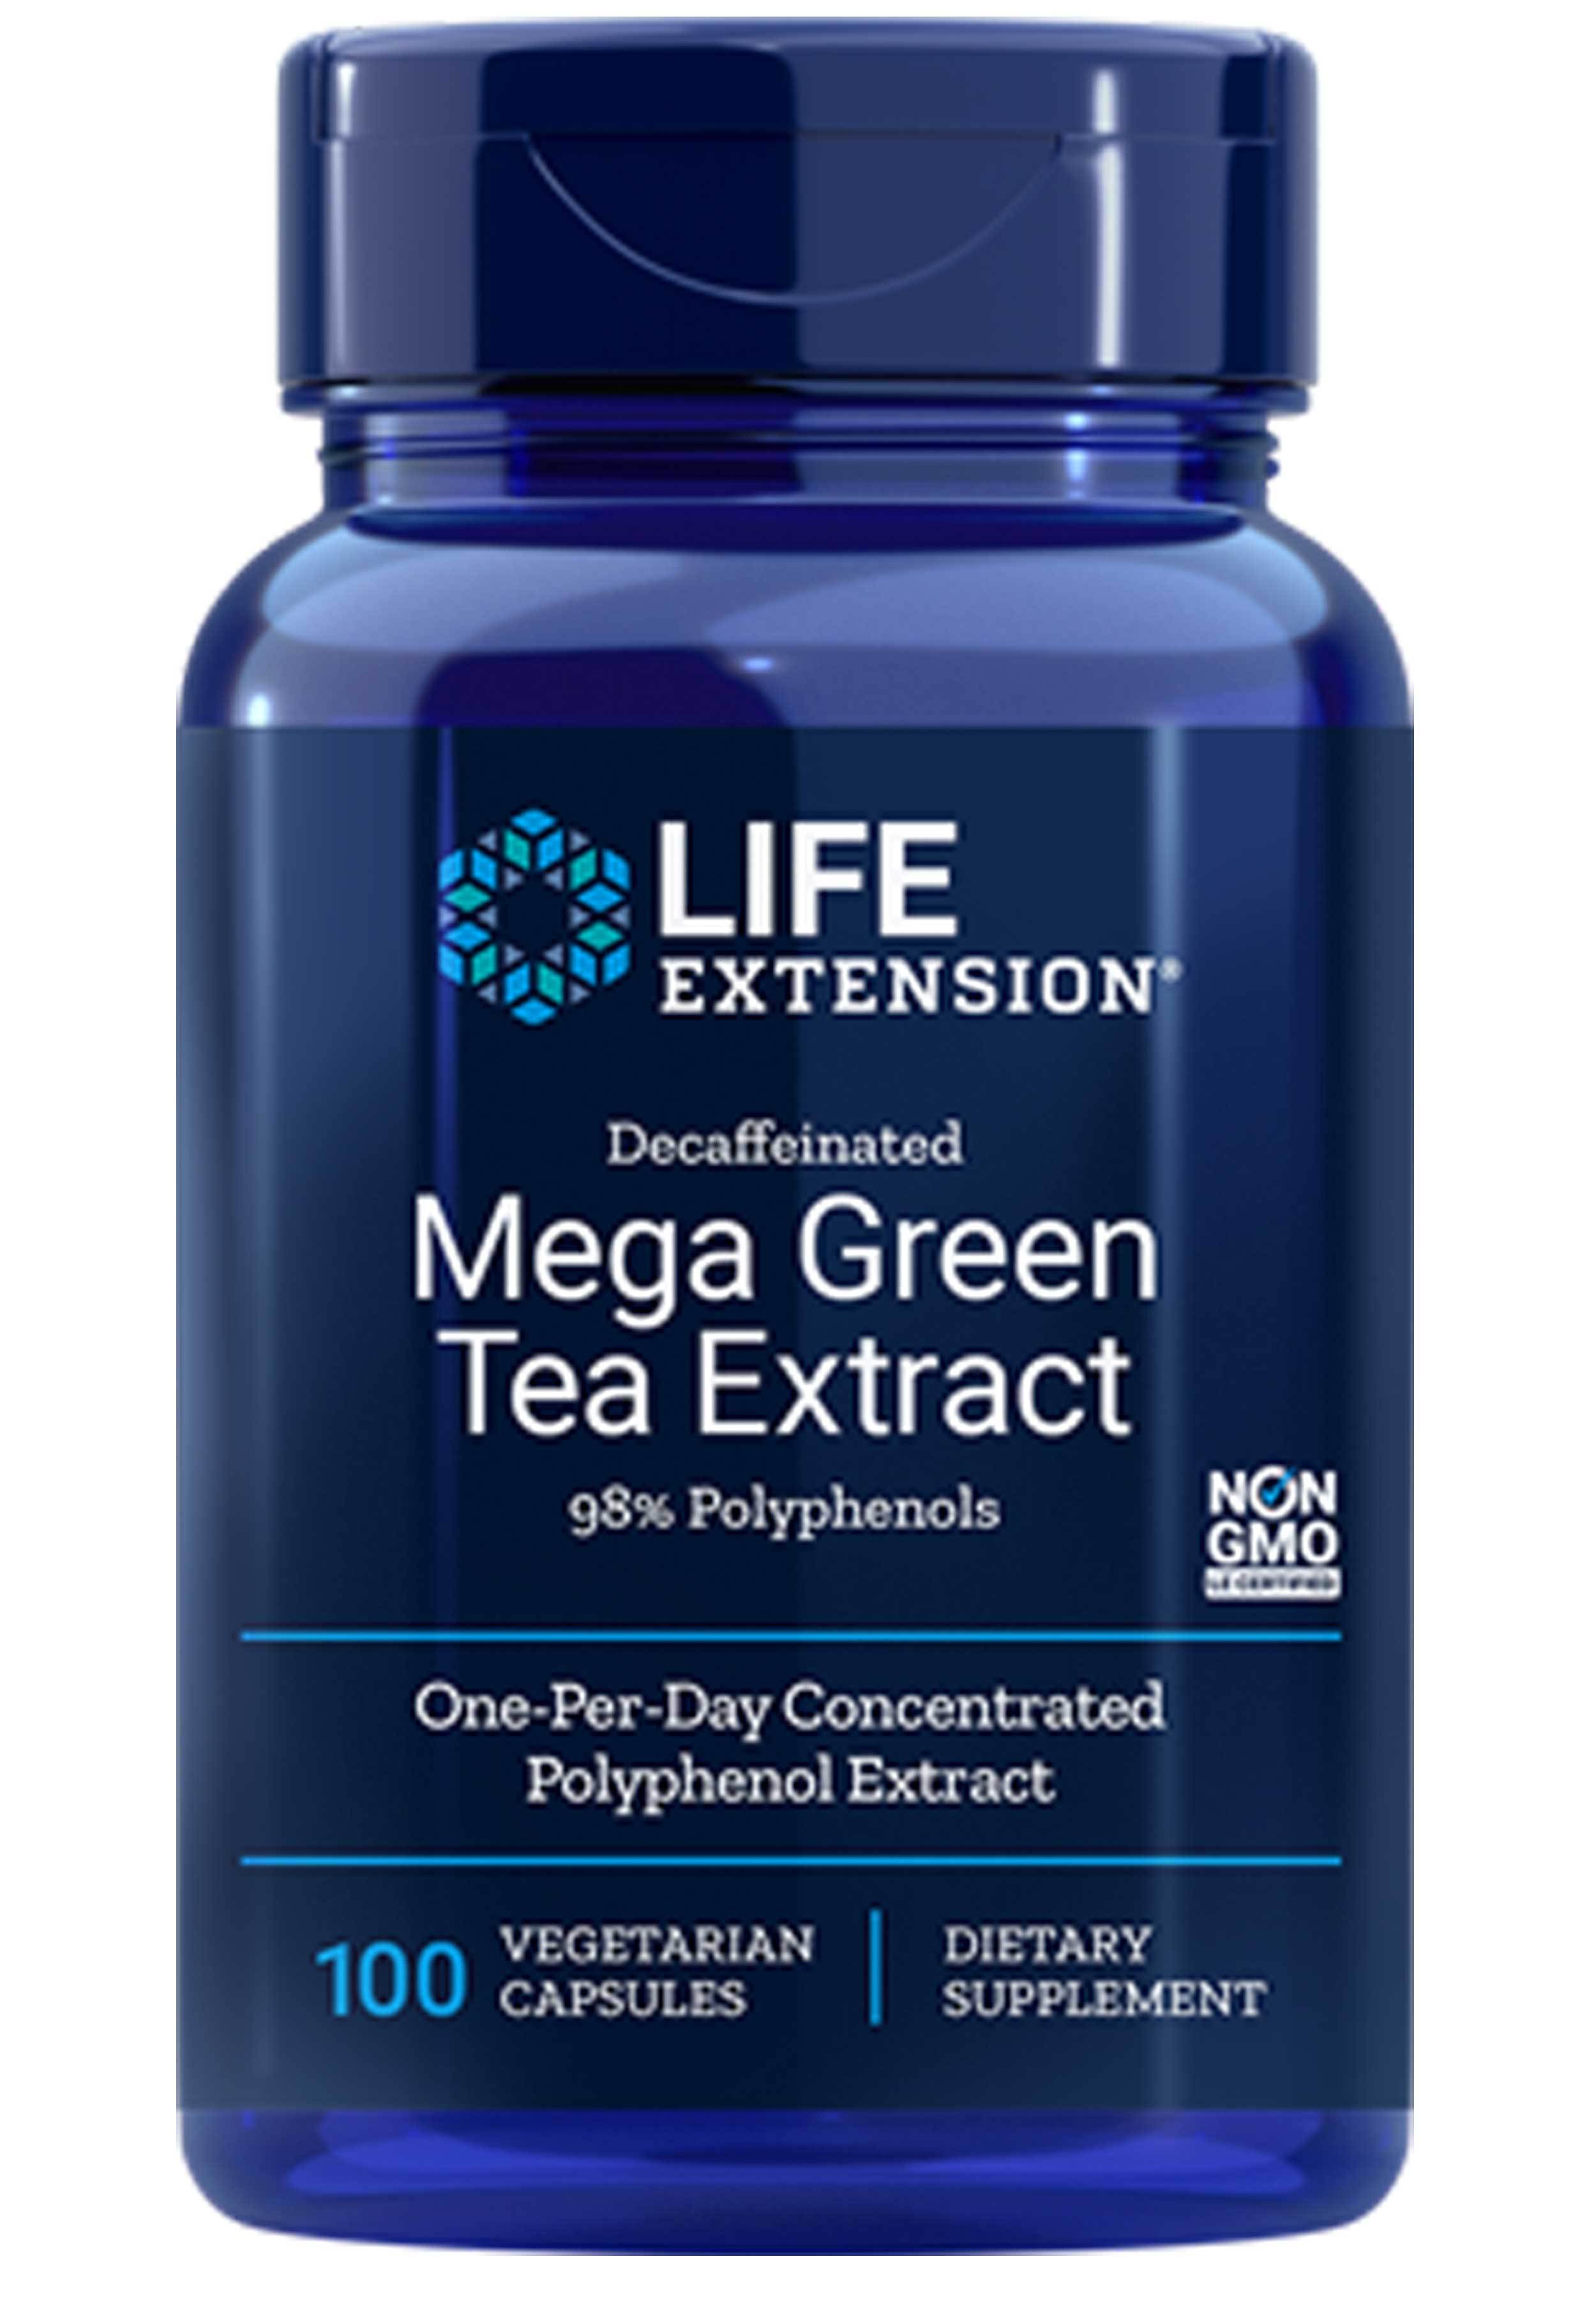 Life Extension Mega Green Tea Extract (Decaffeinated)